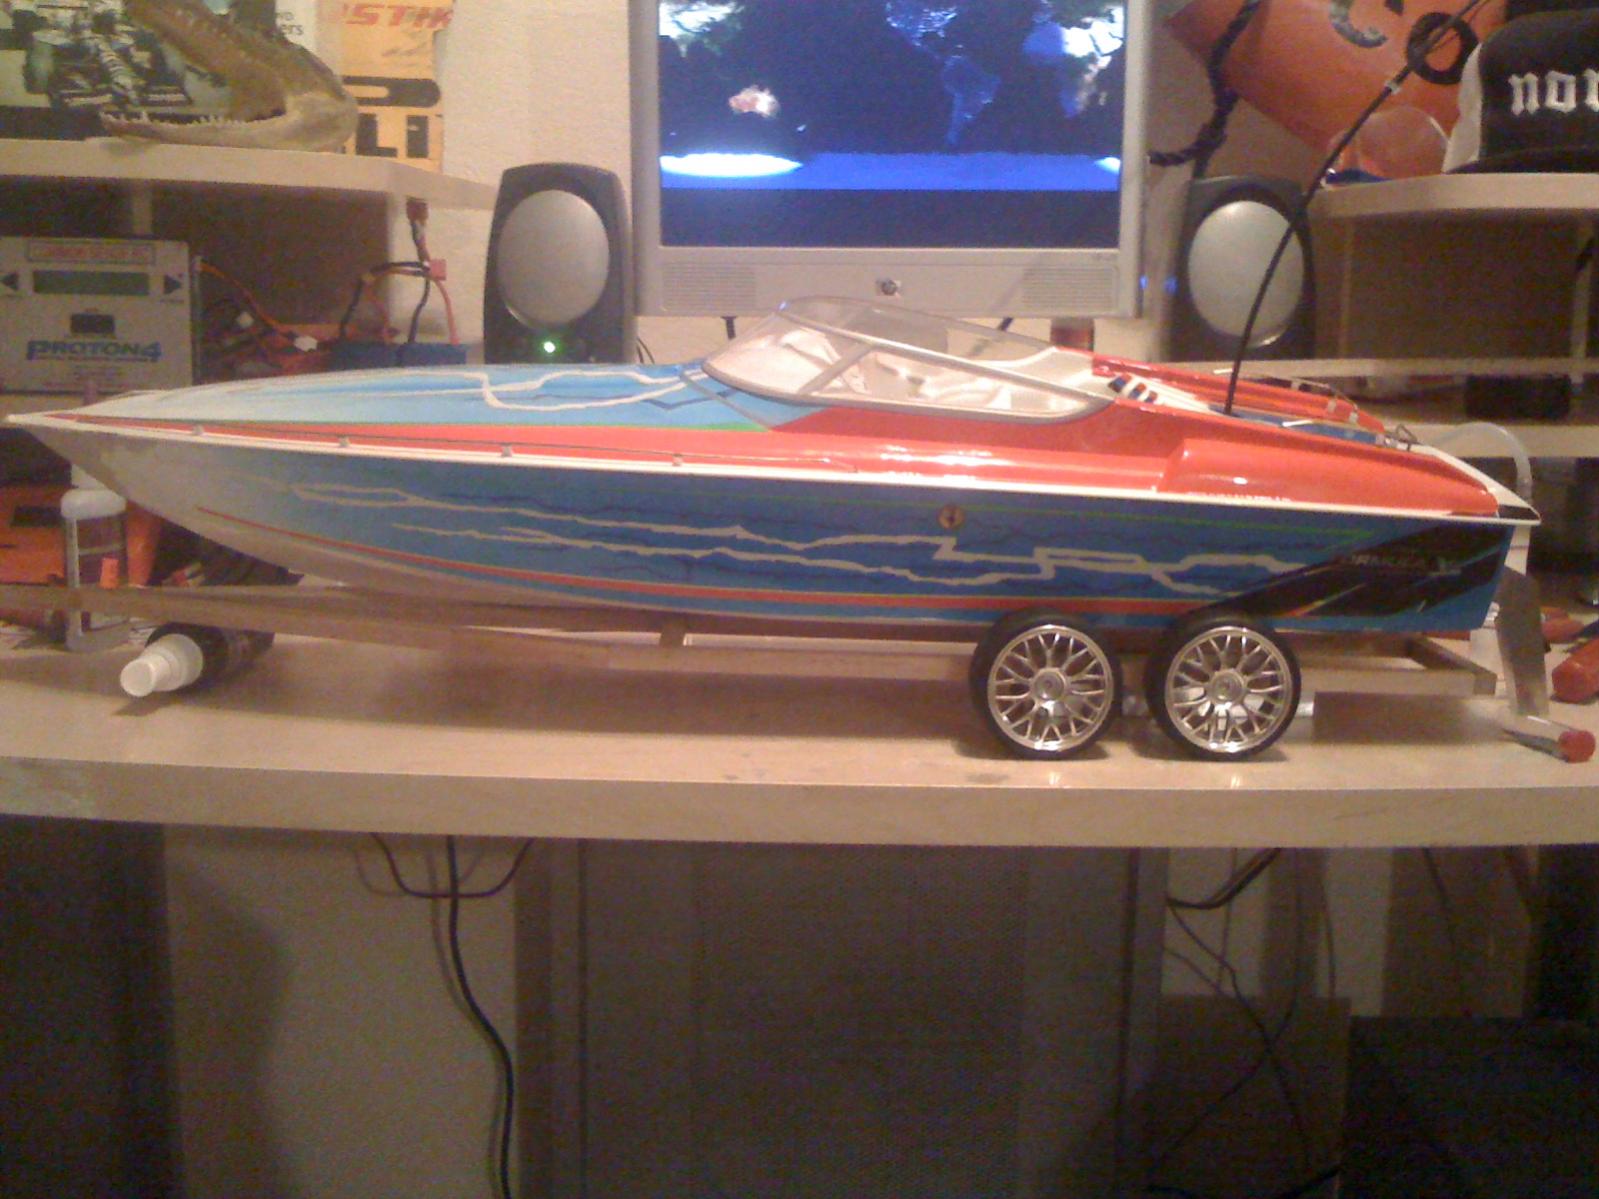 Earth+Race+Boat+Plans RC boat trailer build. - R/C Tech Forums